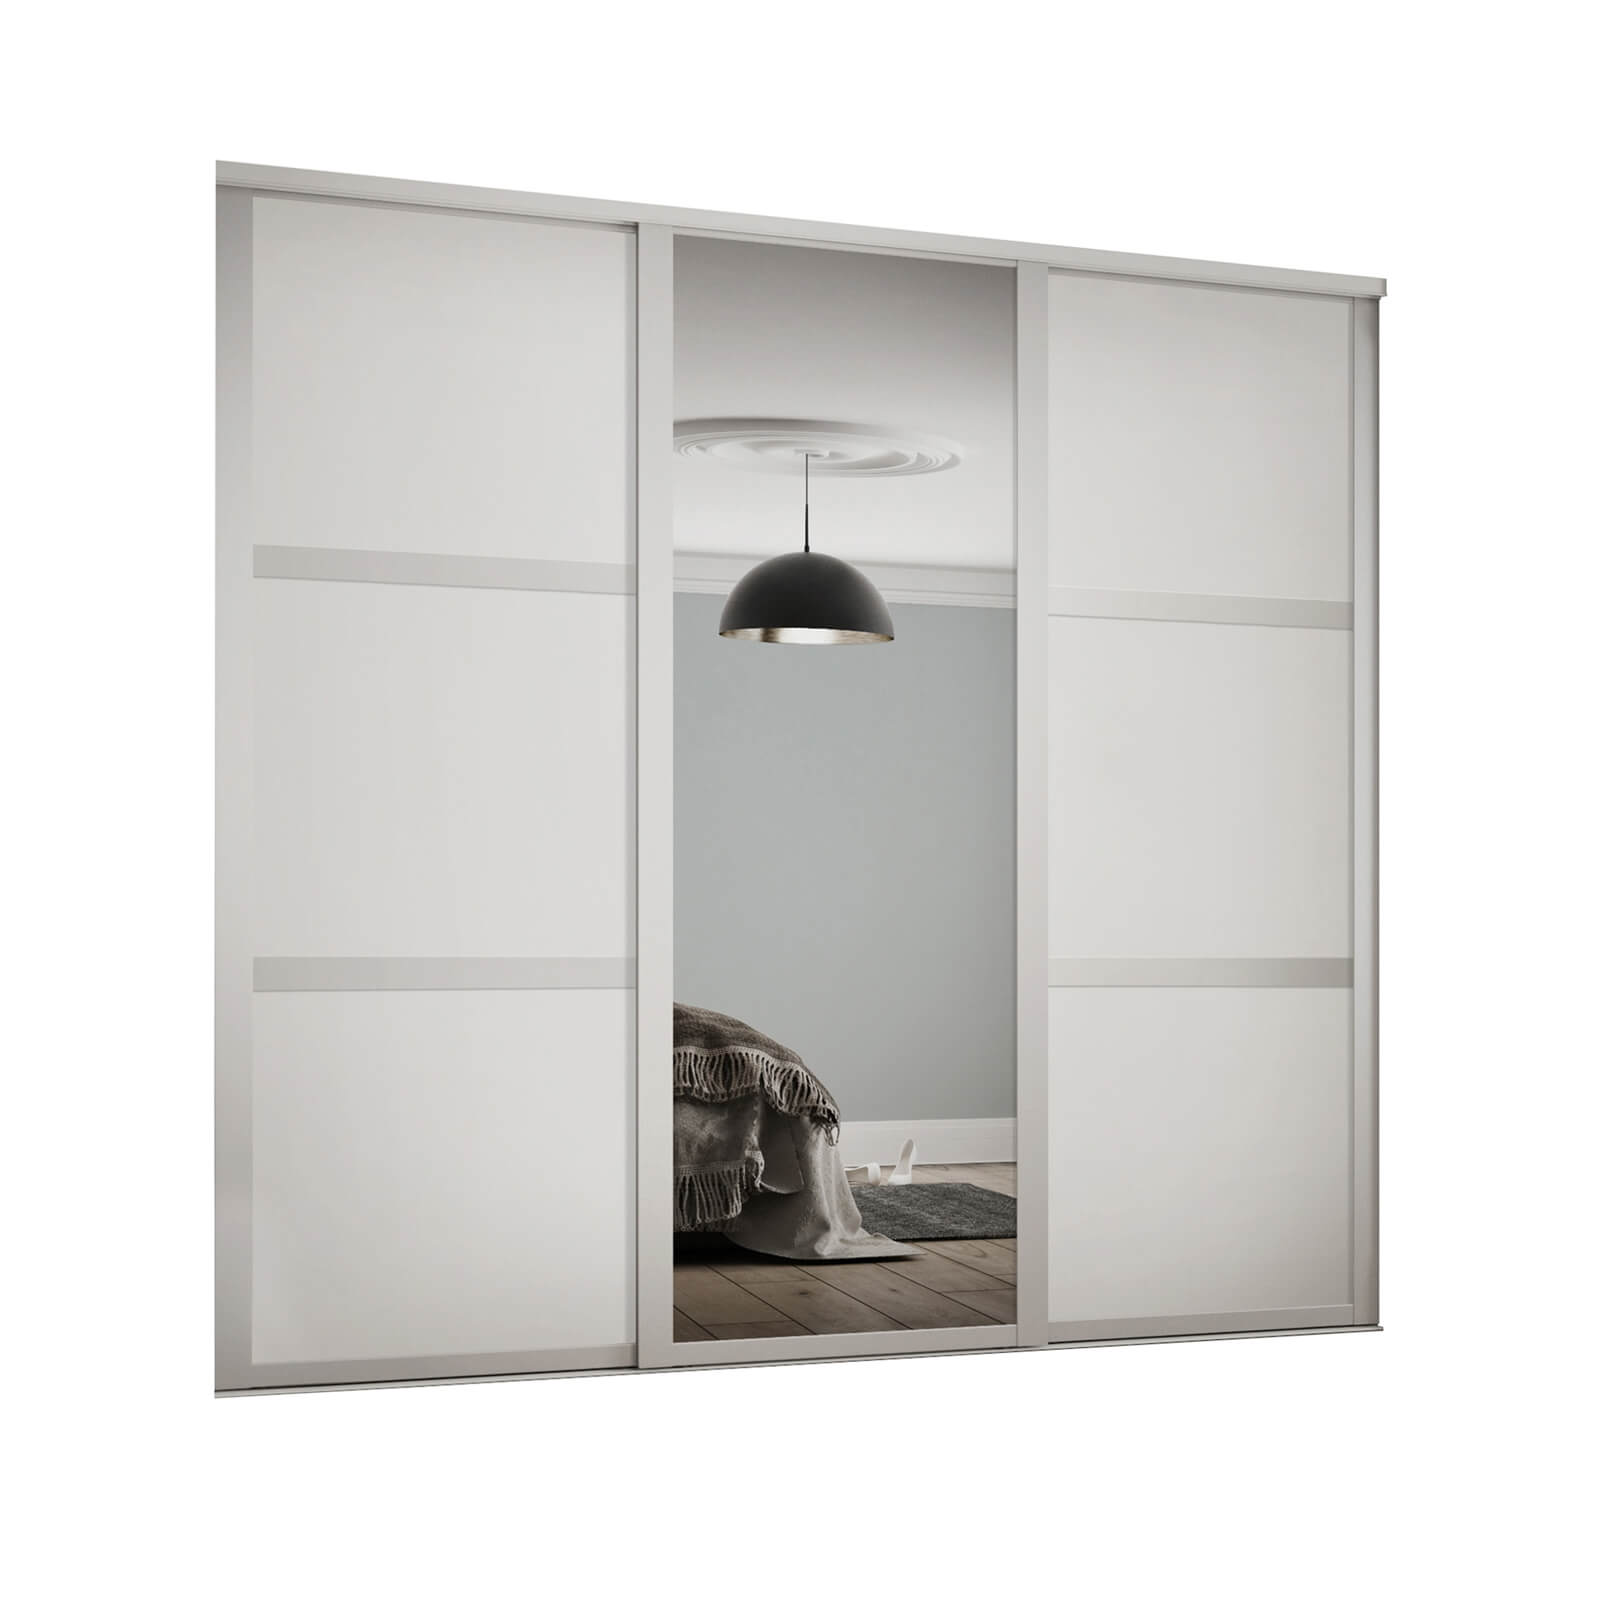 Photo of Shaker 3 Door Sliding Wardrobe Kit White Panel / Mirror With White Frame -w-2136 X -h-2260mm